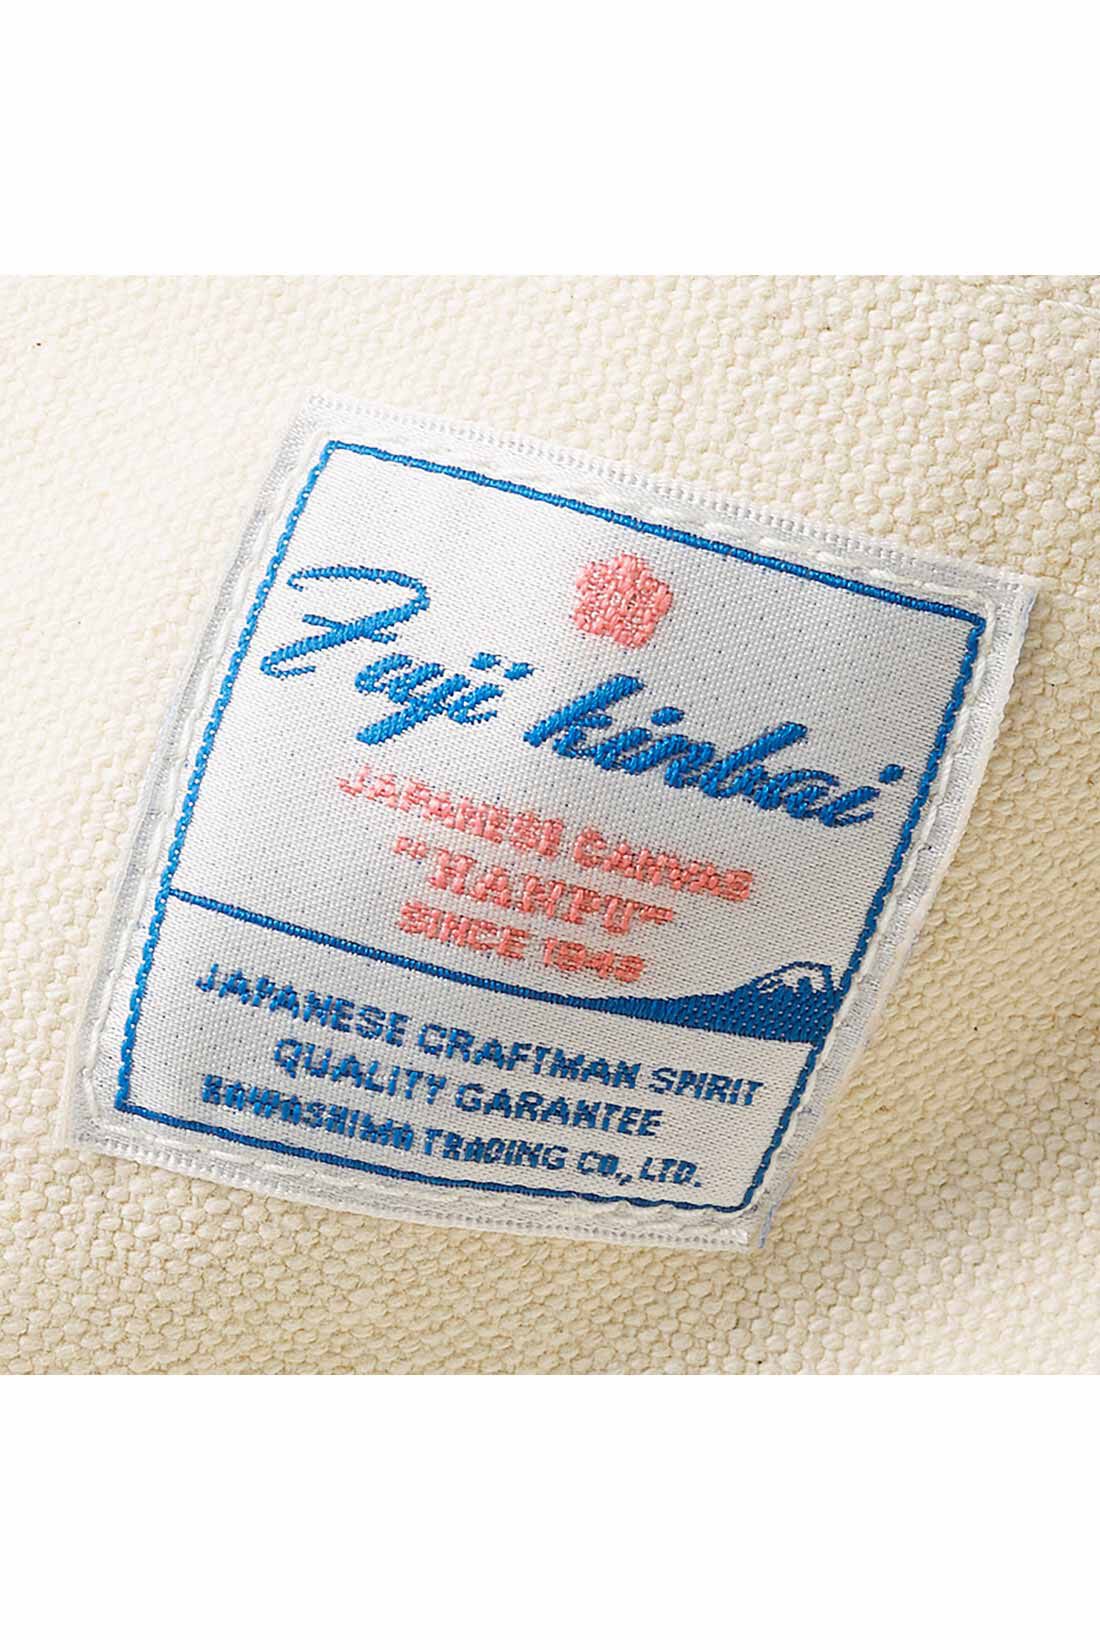 MEDE19F|【高瀬真奈さんコラボ】MEDE19F　セレンディピティーバッグ|歴史のある日本製帆布ブランド「FUJI KINBAI」の織りネーム付き。